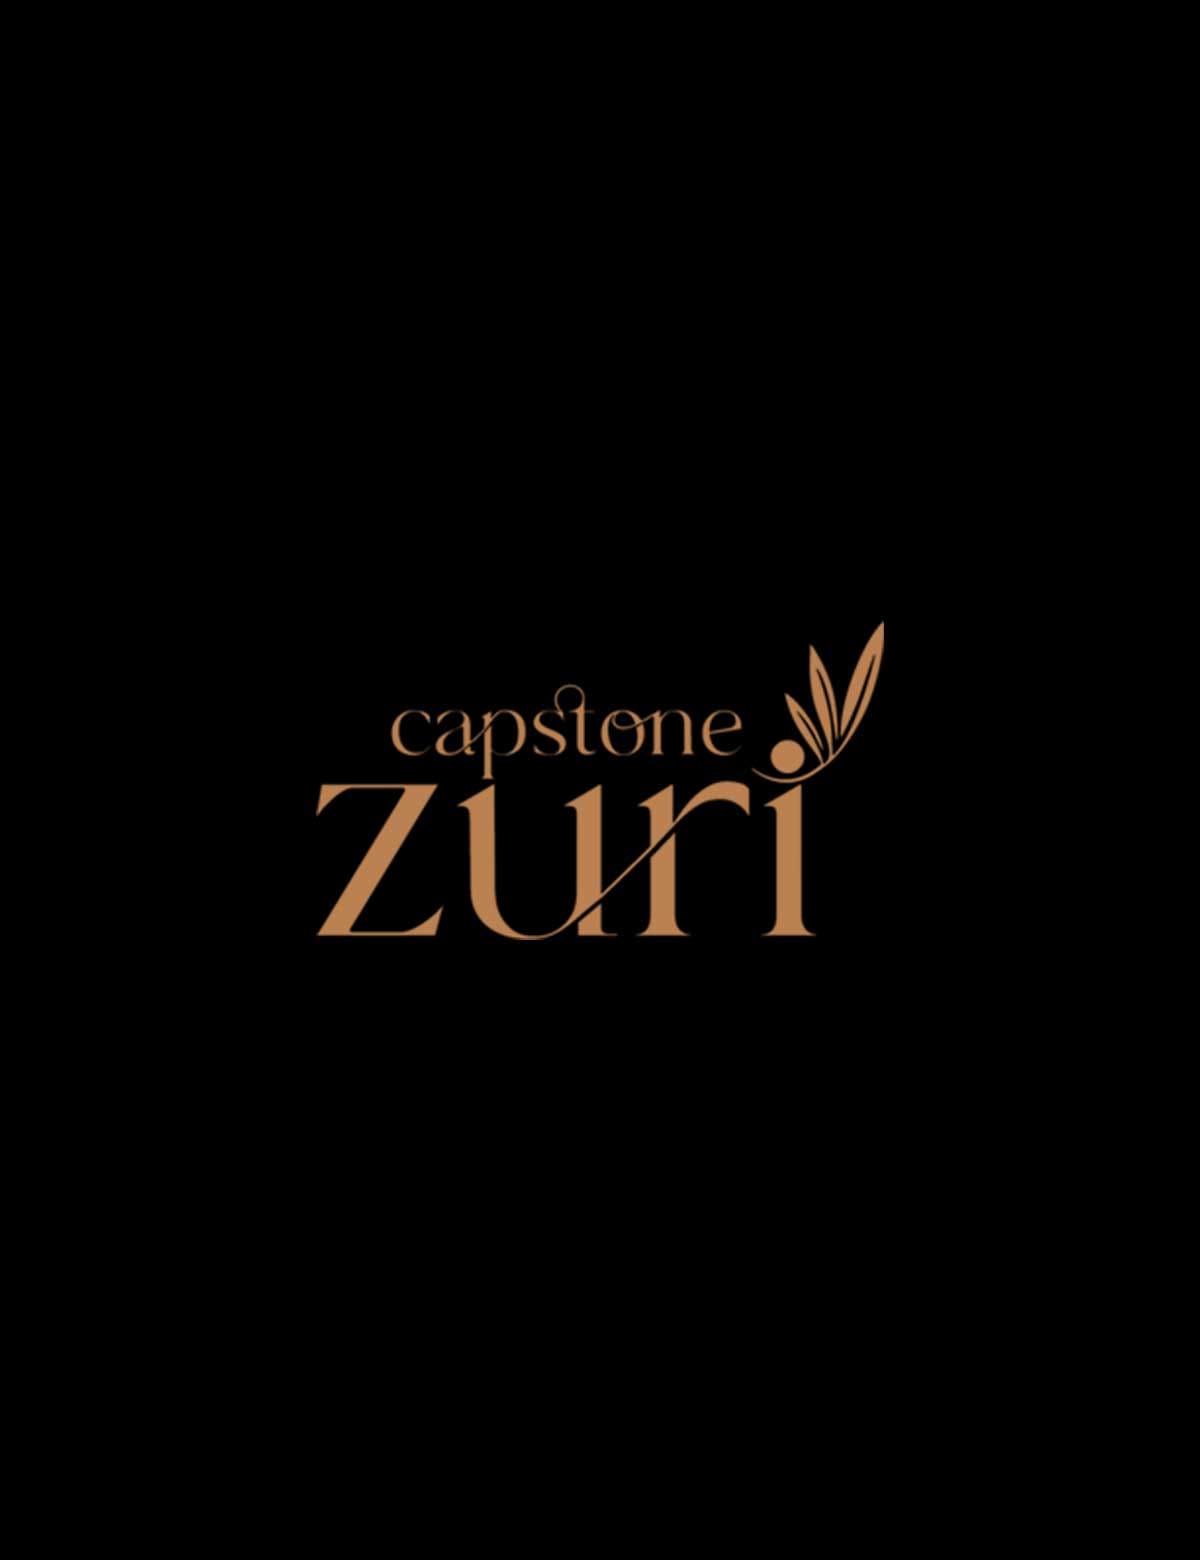 Capstone Zuri